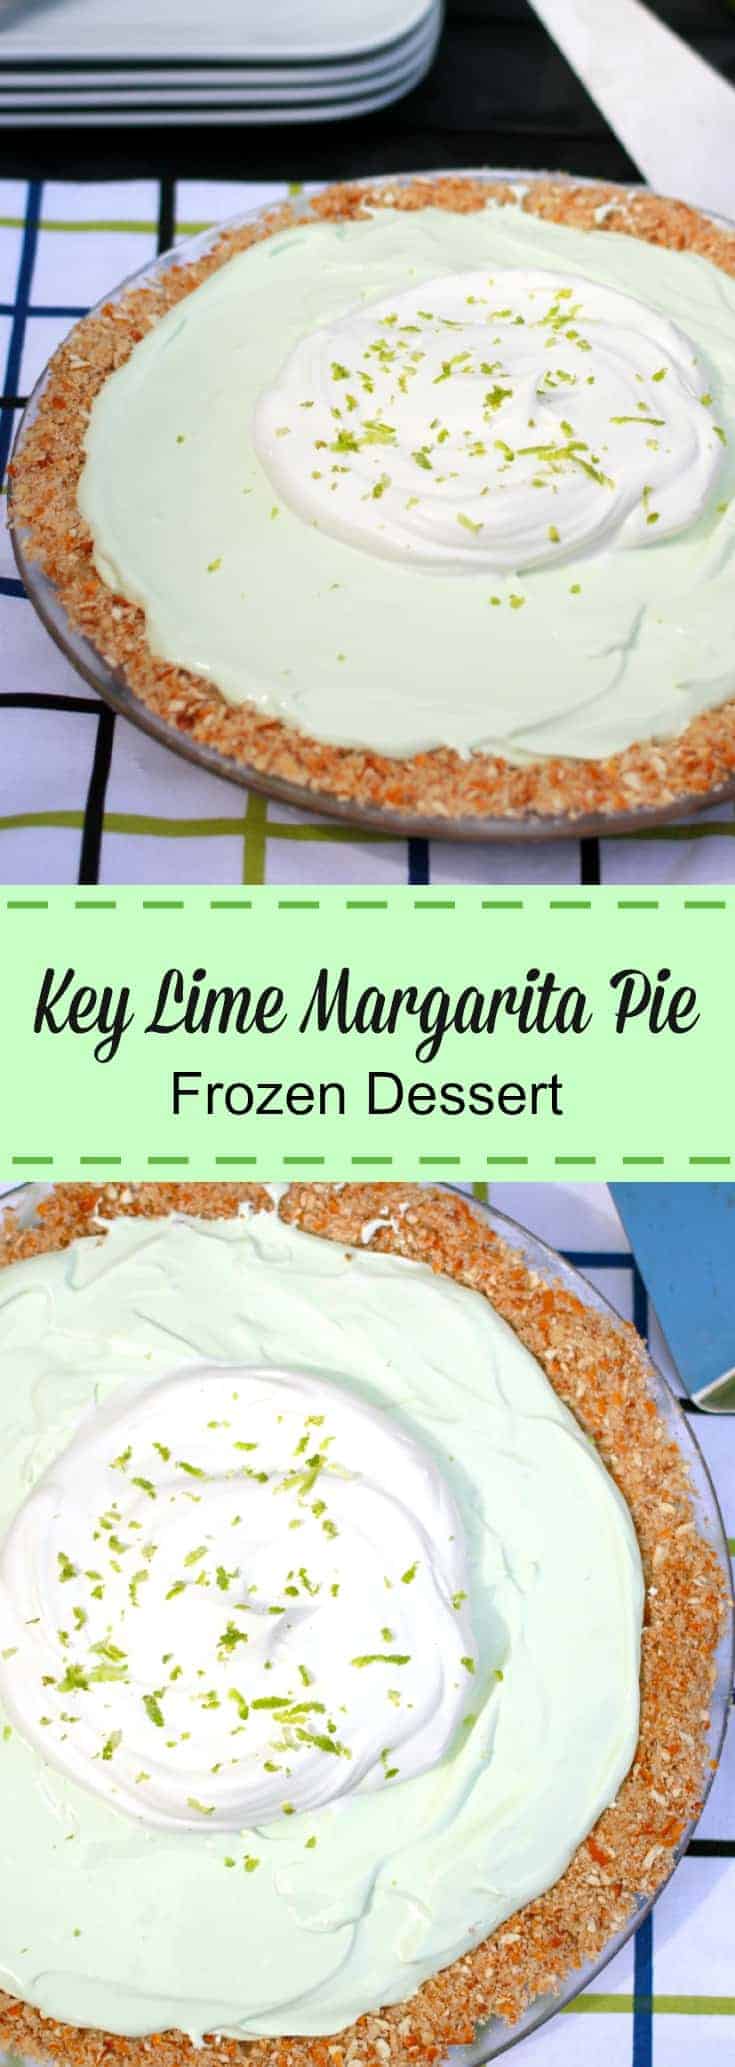 Key Lime Margarita Pie frozen dessert recipe